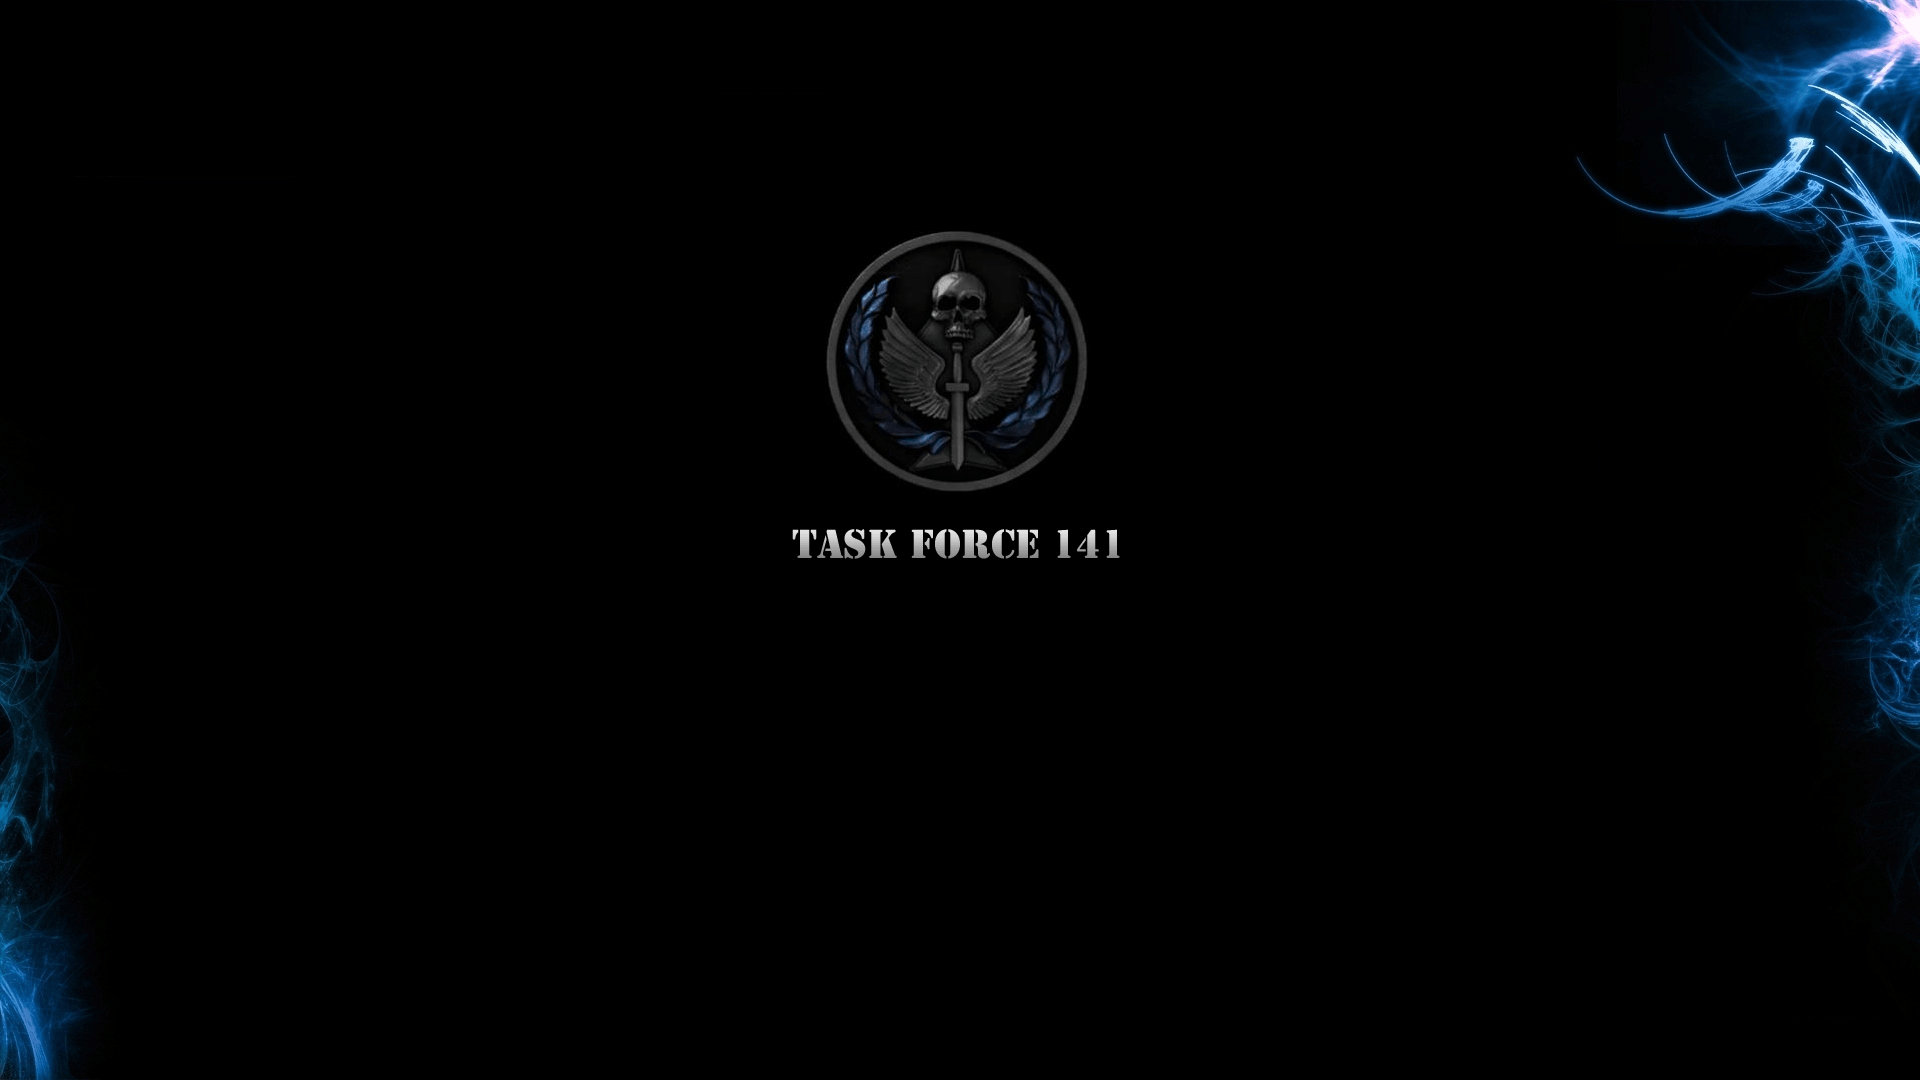 Task Force 141 rotating emblem by g3xter